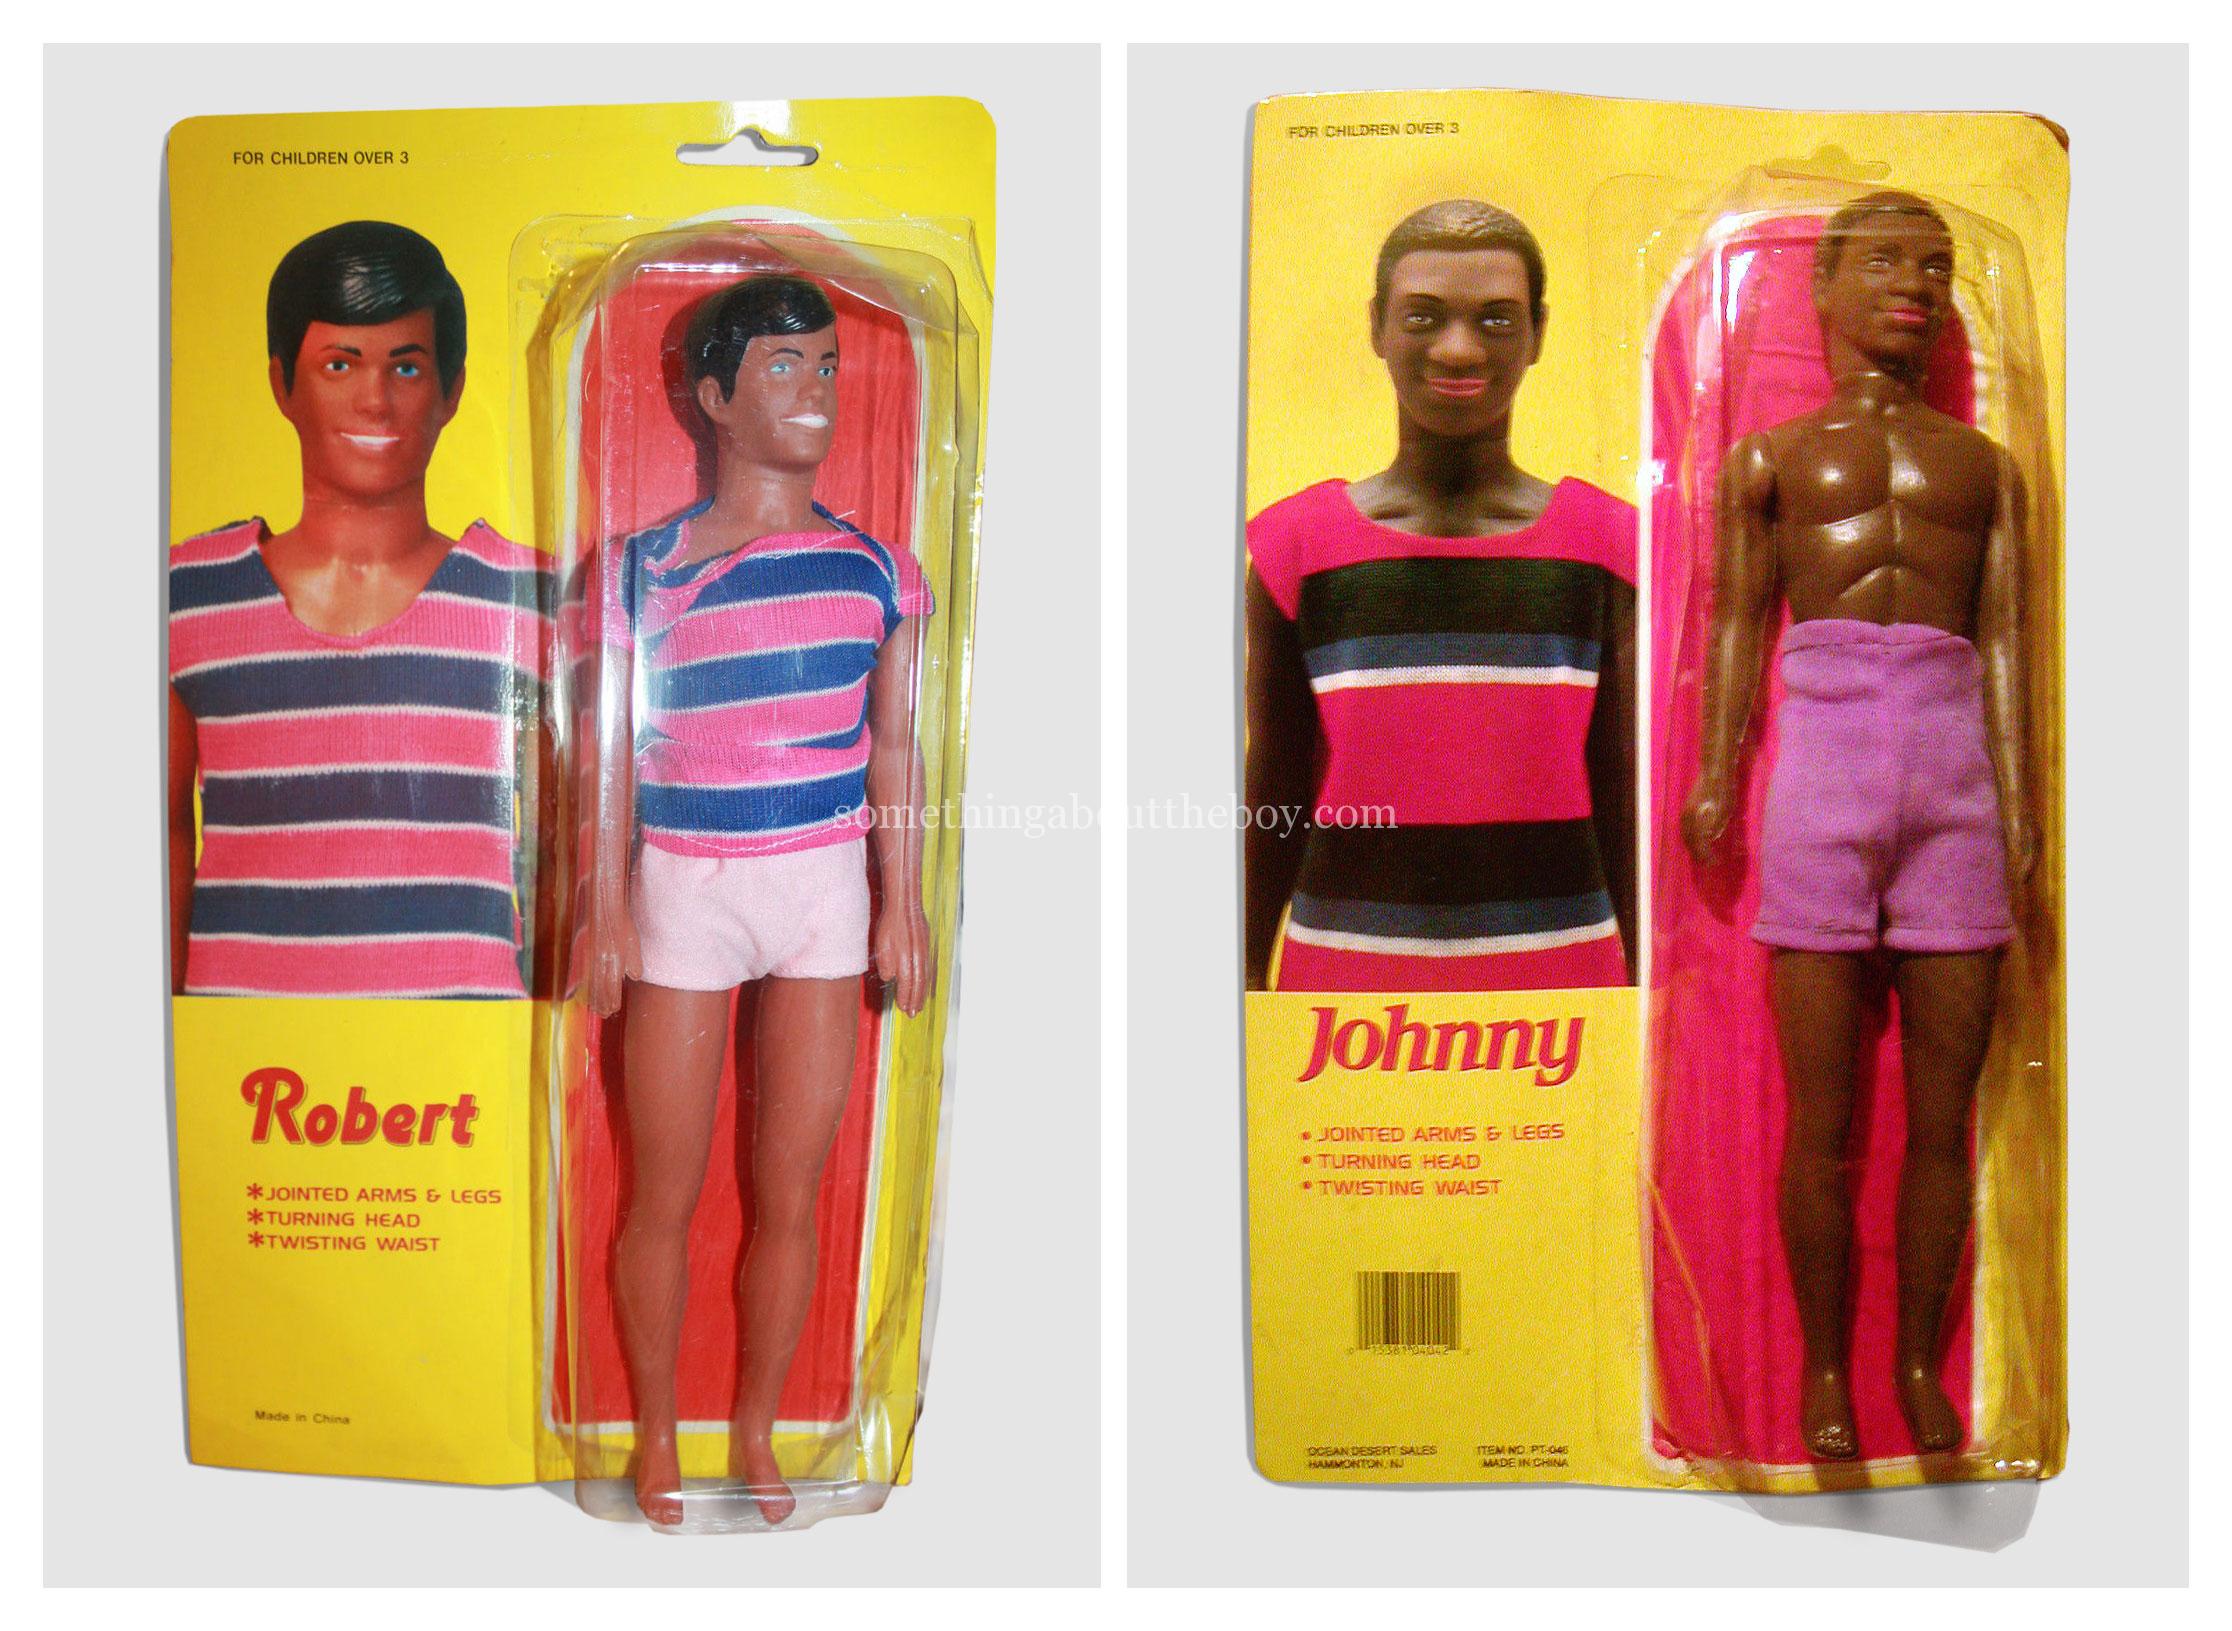 Robert and Johnny dolls by Ocean Desert Sales